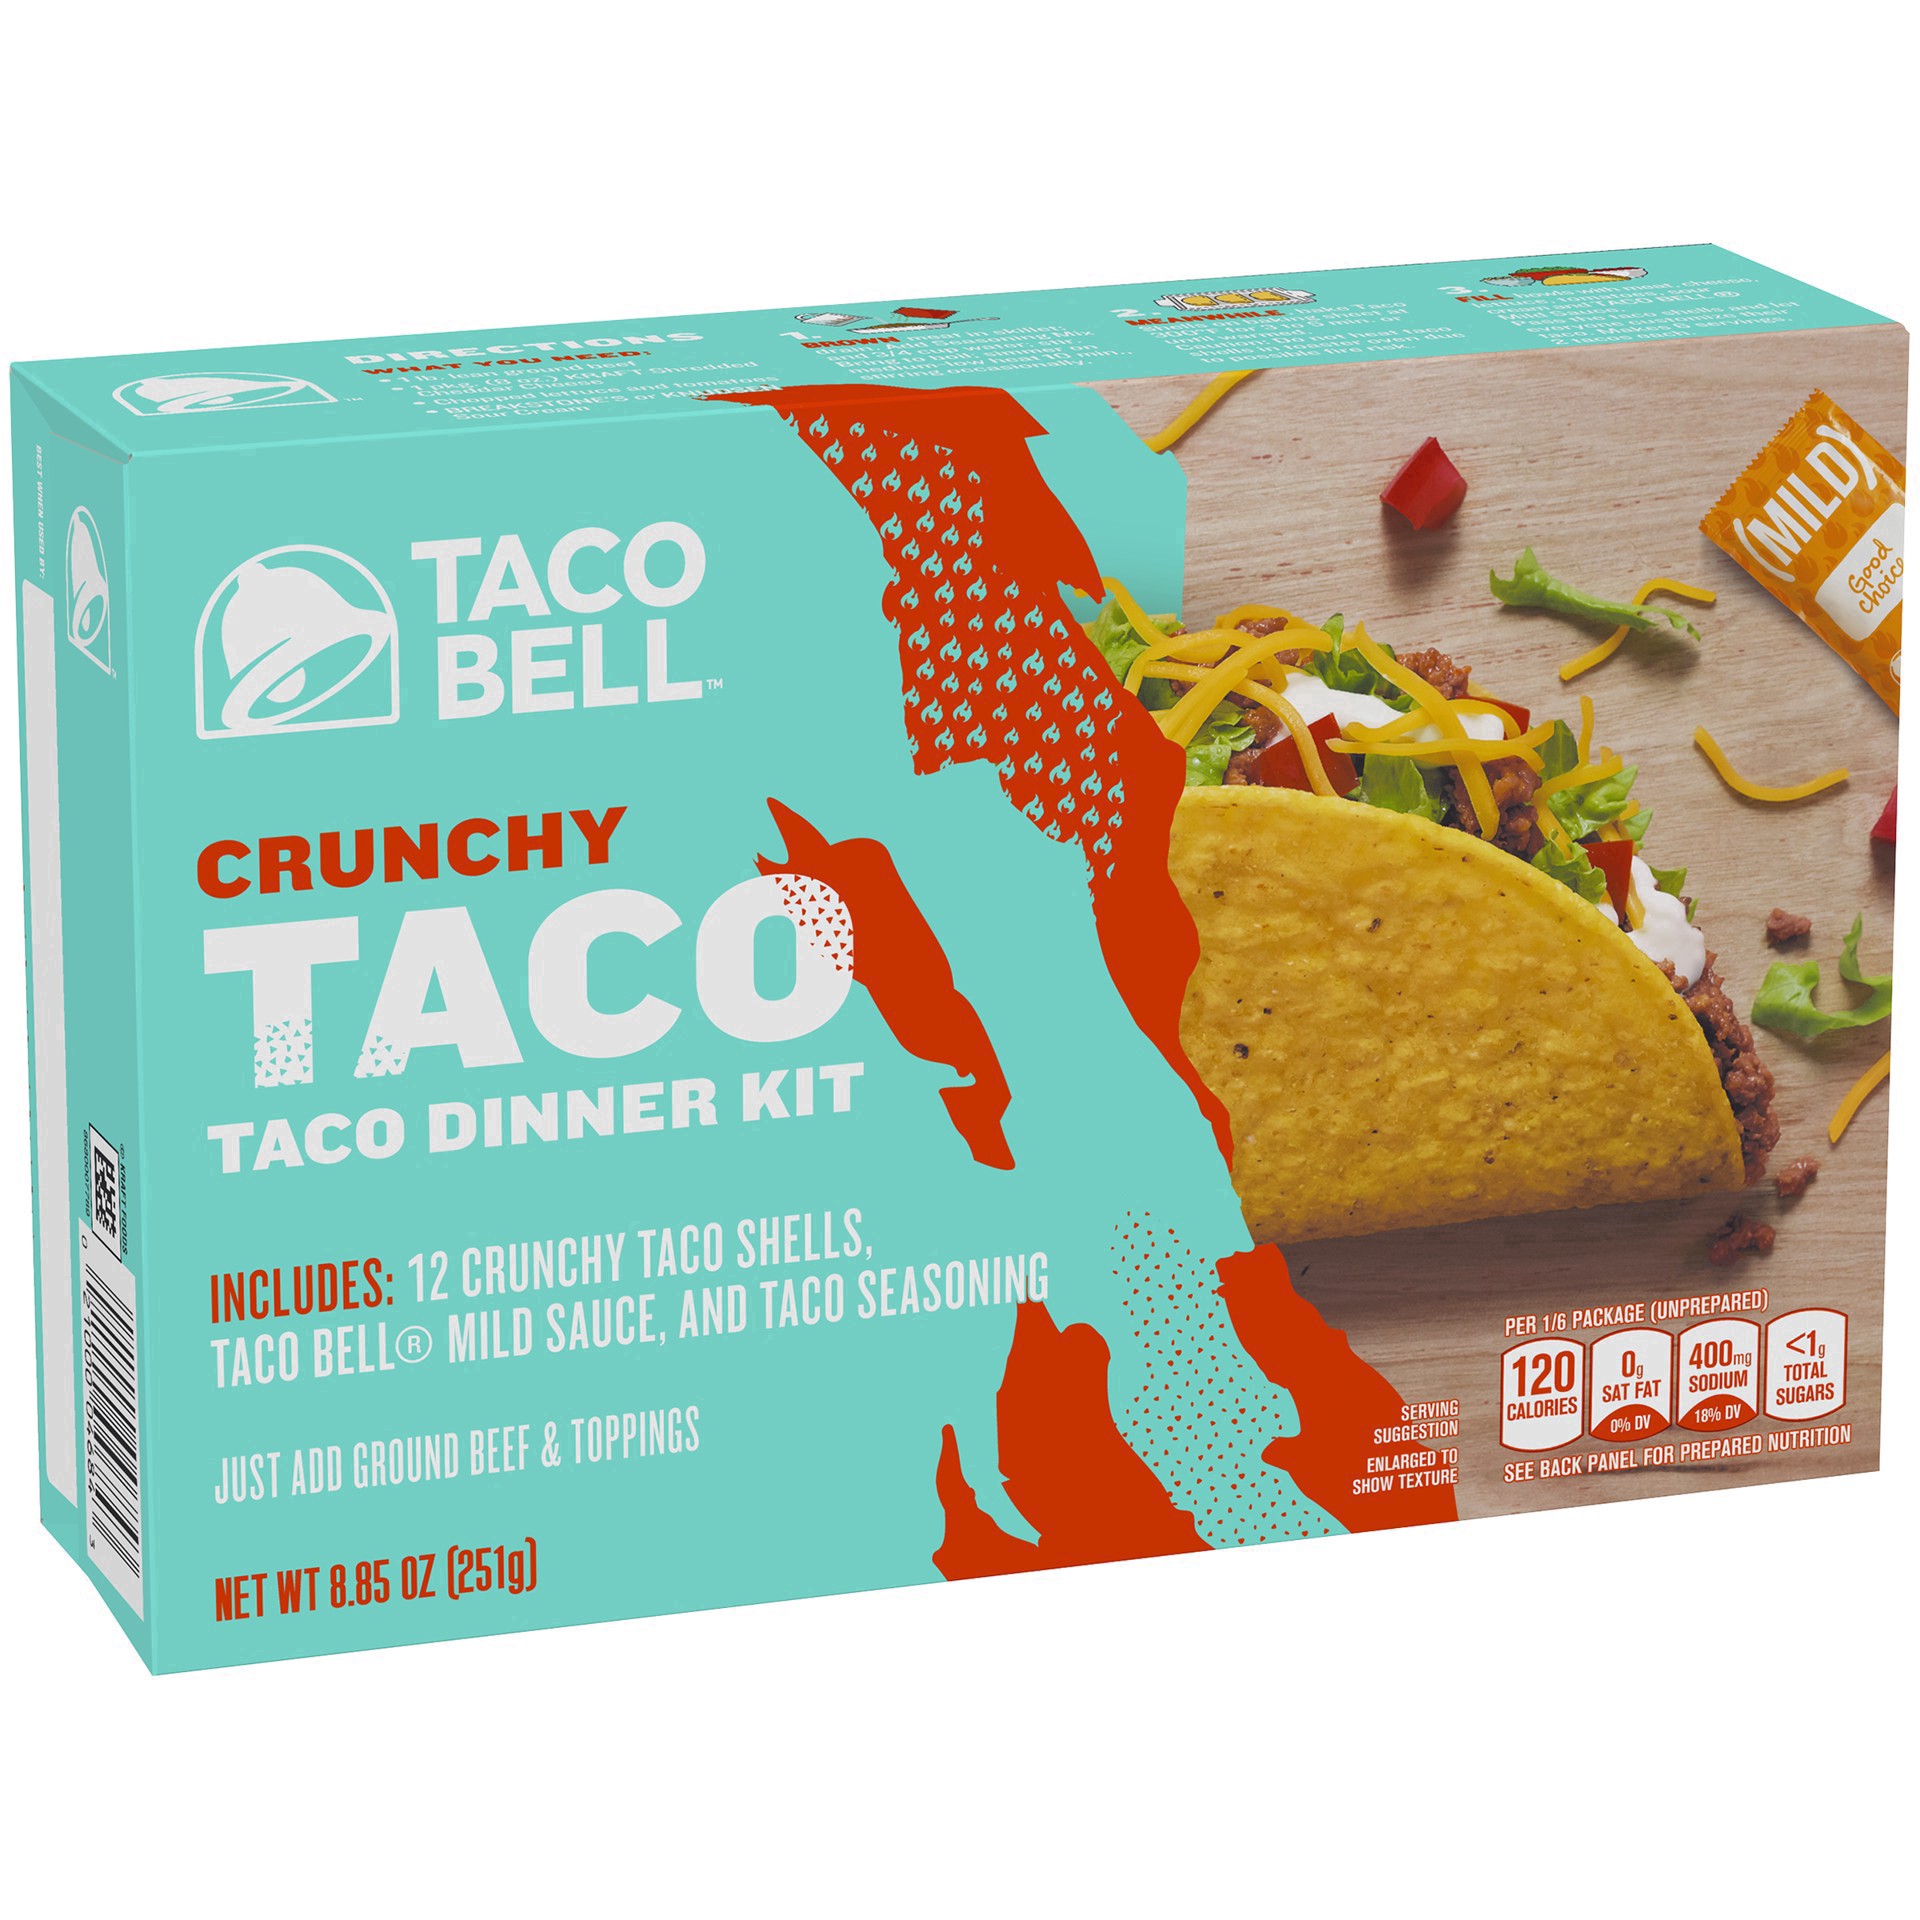 slide 28 of 91, Taco Bell Crunchy Taco Cravings Kit with 12 Crunchy Taco Shells, Taco Bell Mild Sauce & Seasoning, 8.85 oz Box, 1 ct